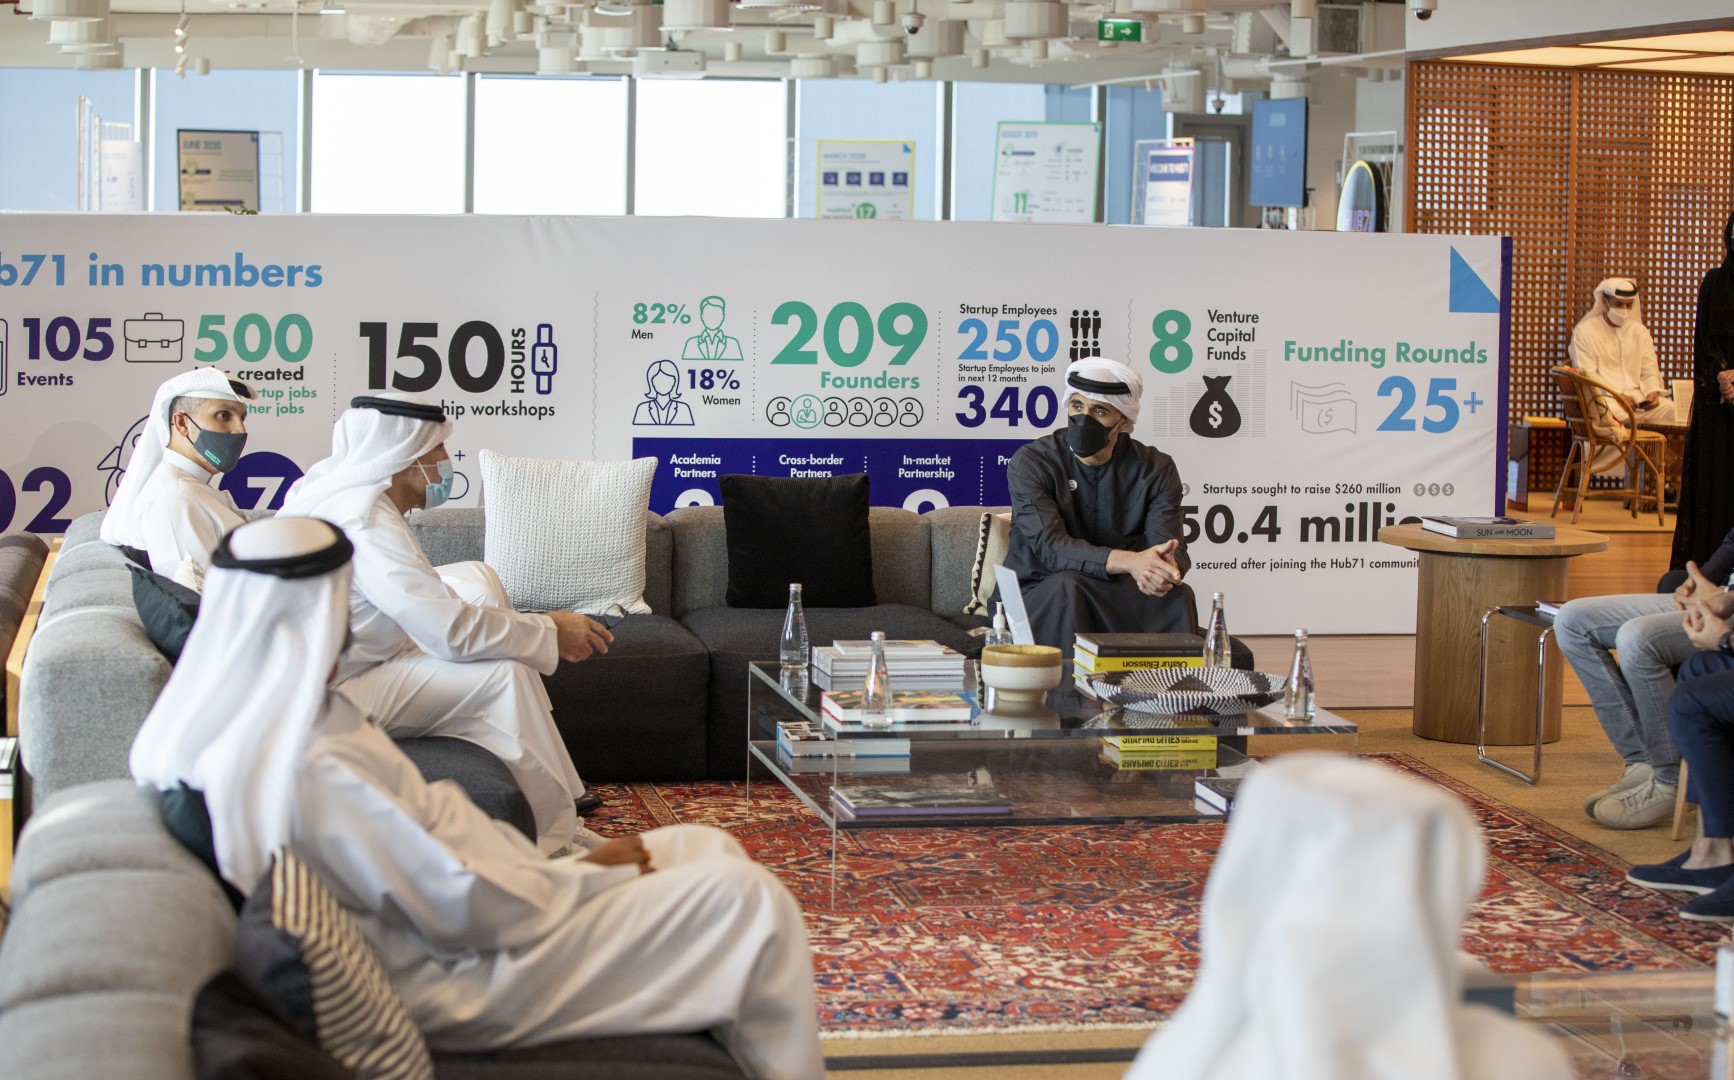 Khaled Bin Mohamed Bin Zayed Visits Hub71 As It Celebrates More Than 100 Start-Ups Joining Tech Ecosystem